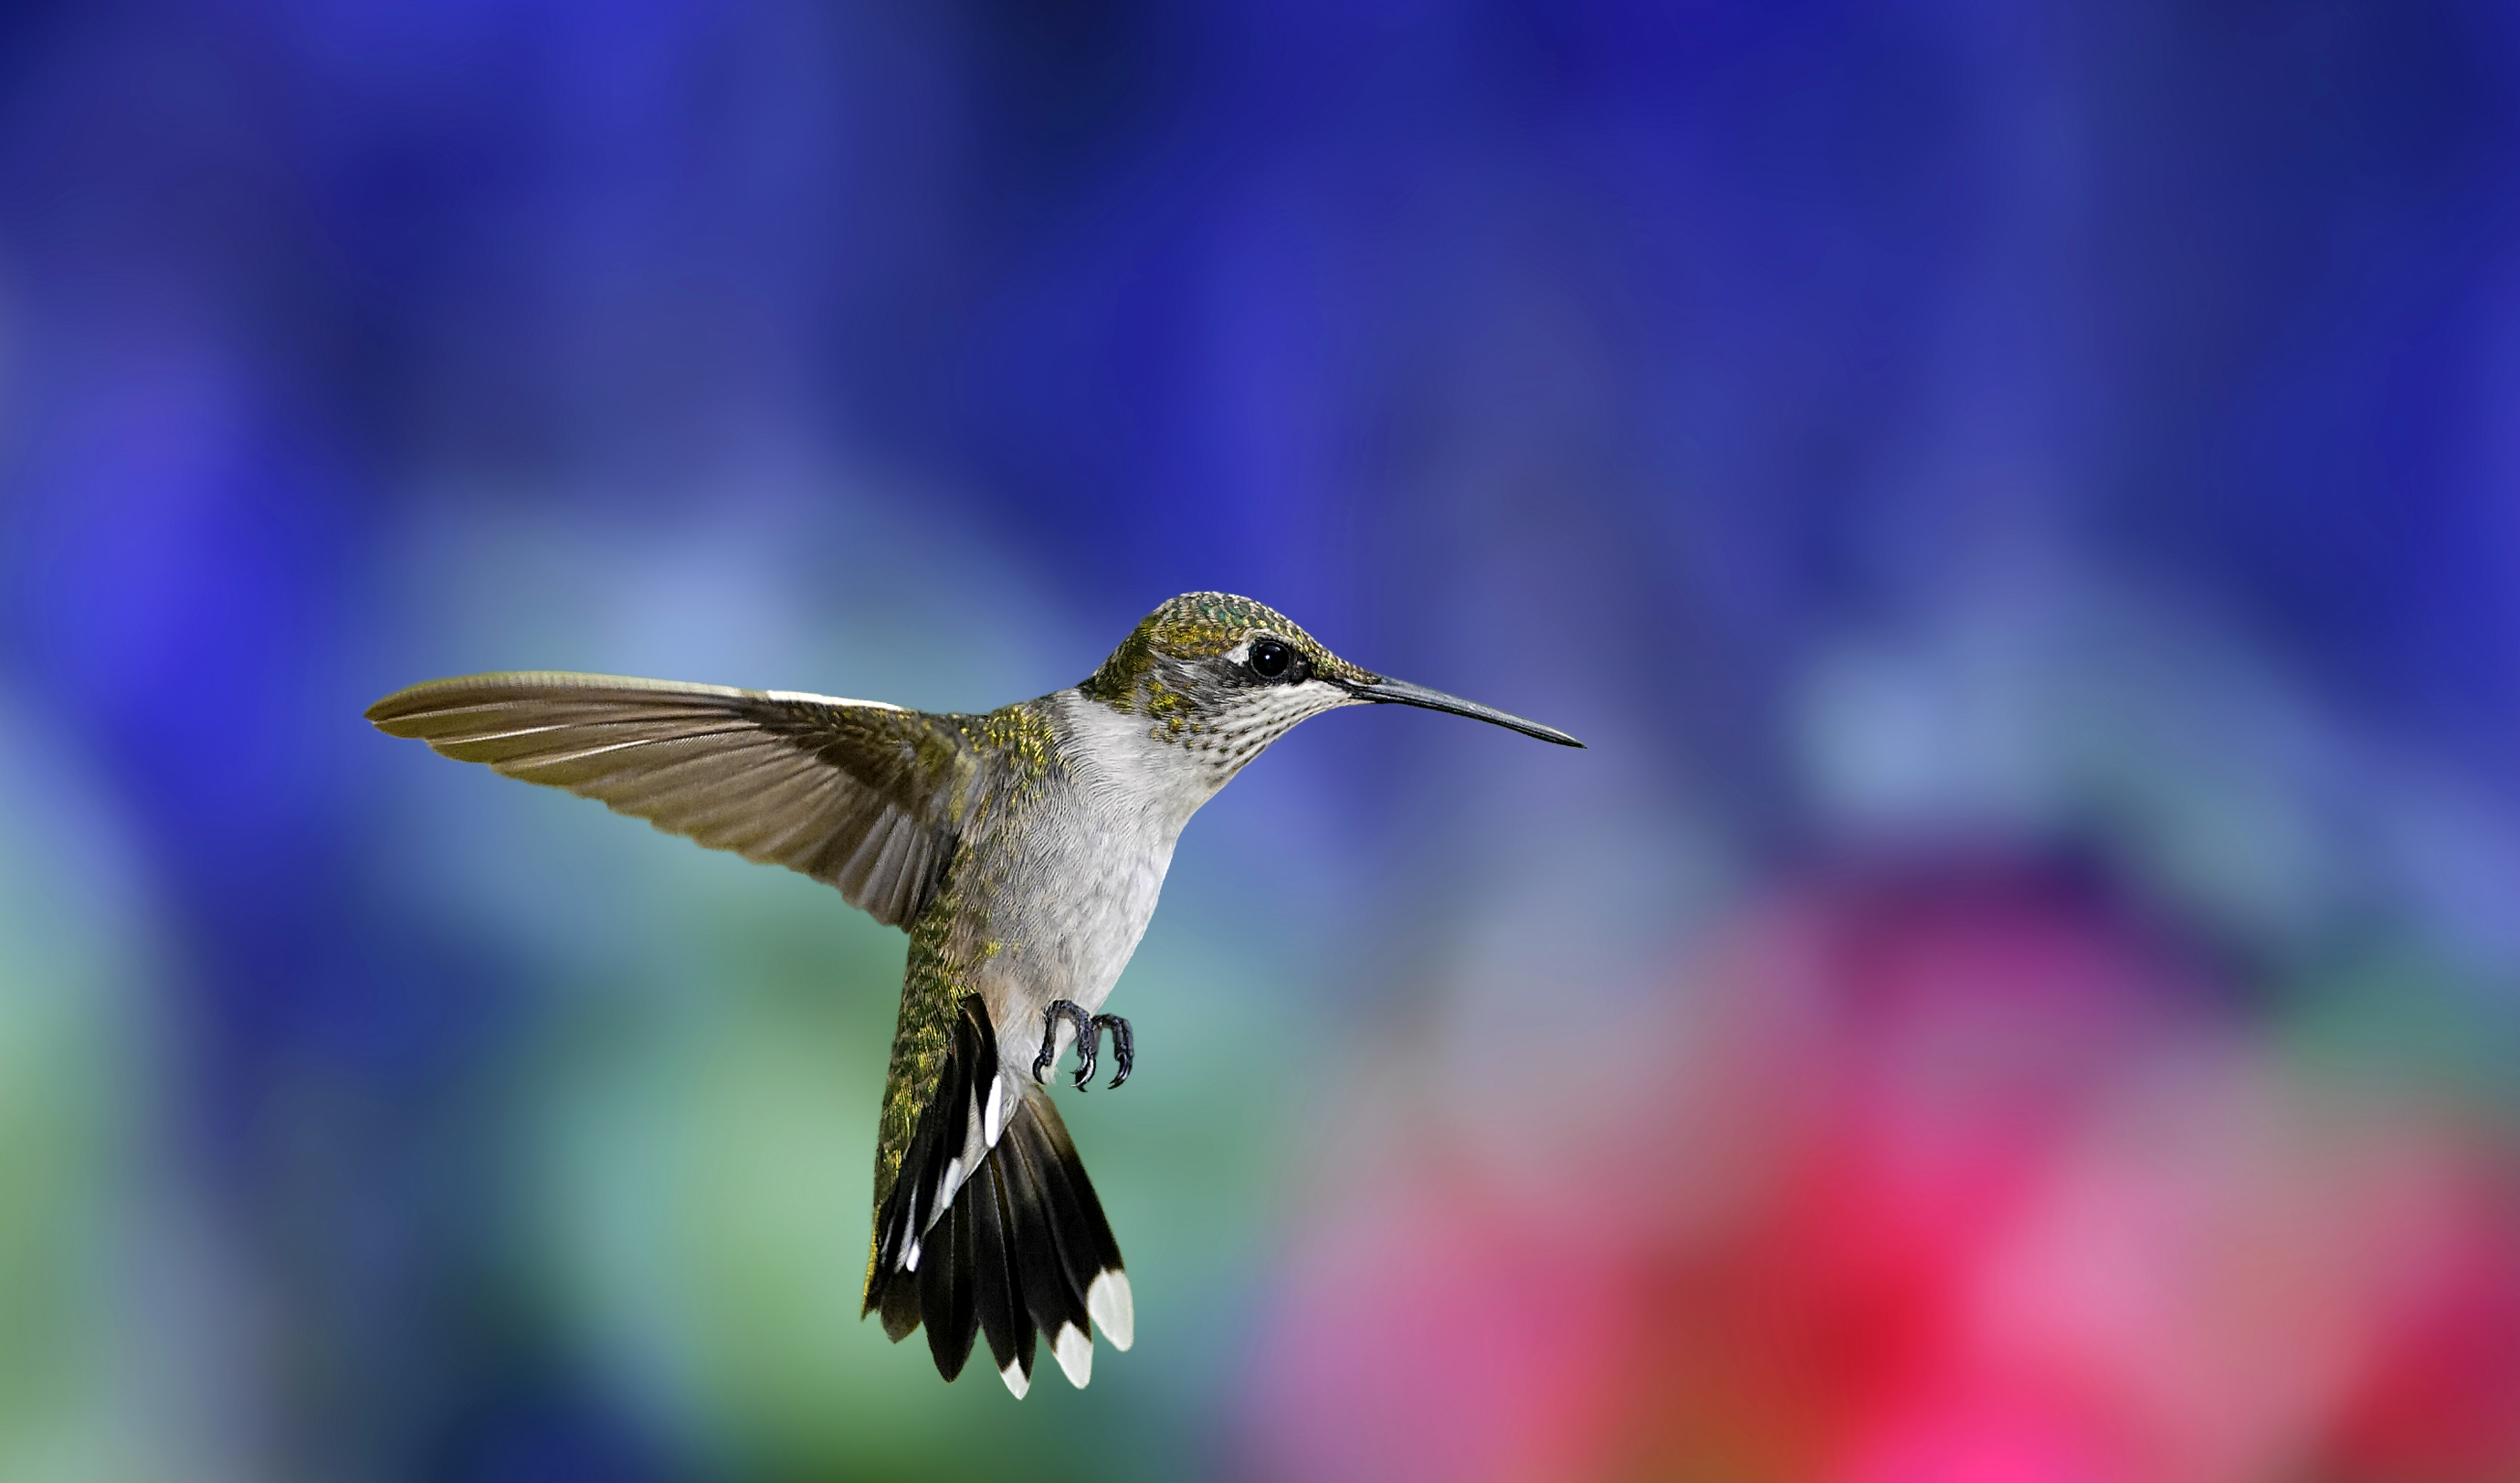 Hummingbird Bird Flight Wings Flap Colorful Background